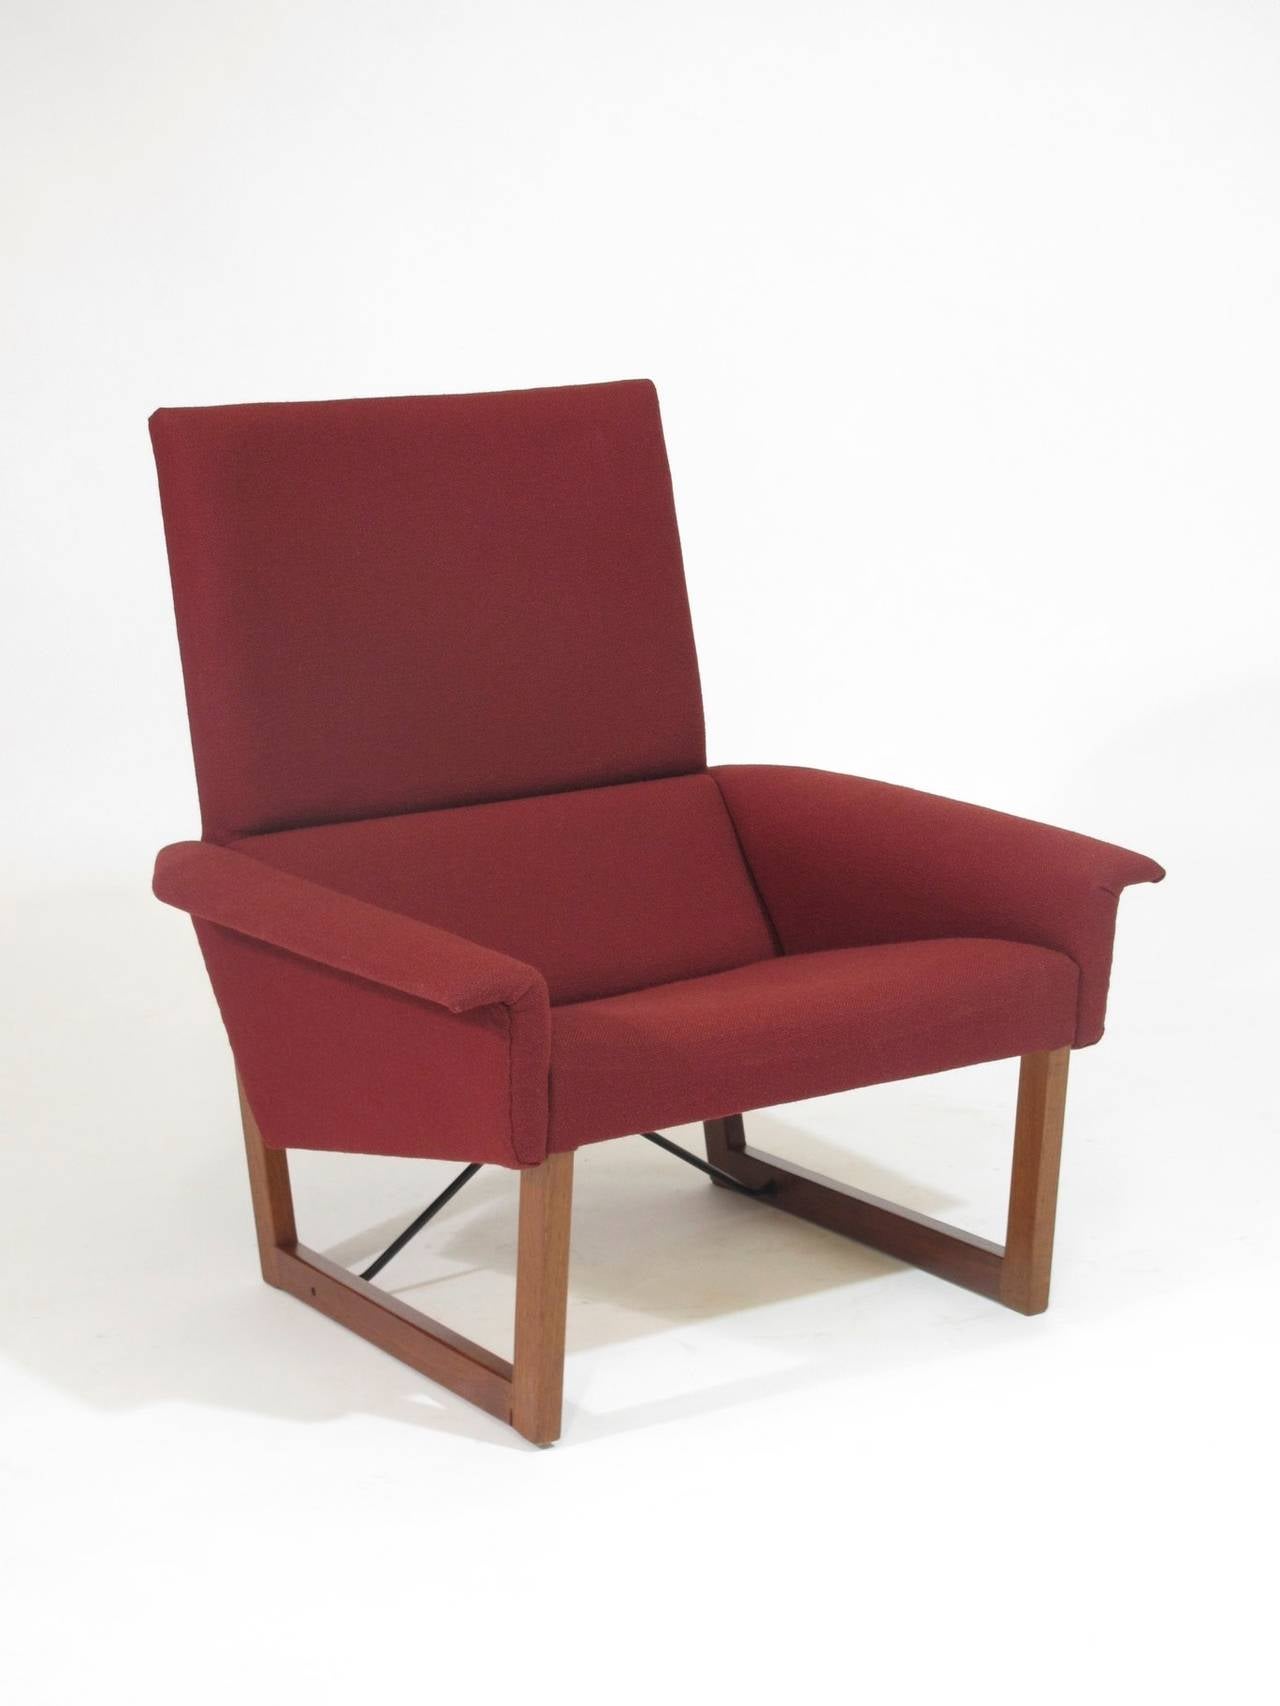 Illum Wikkelso Danish Lounge Chair 1